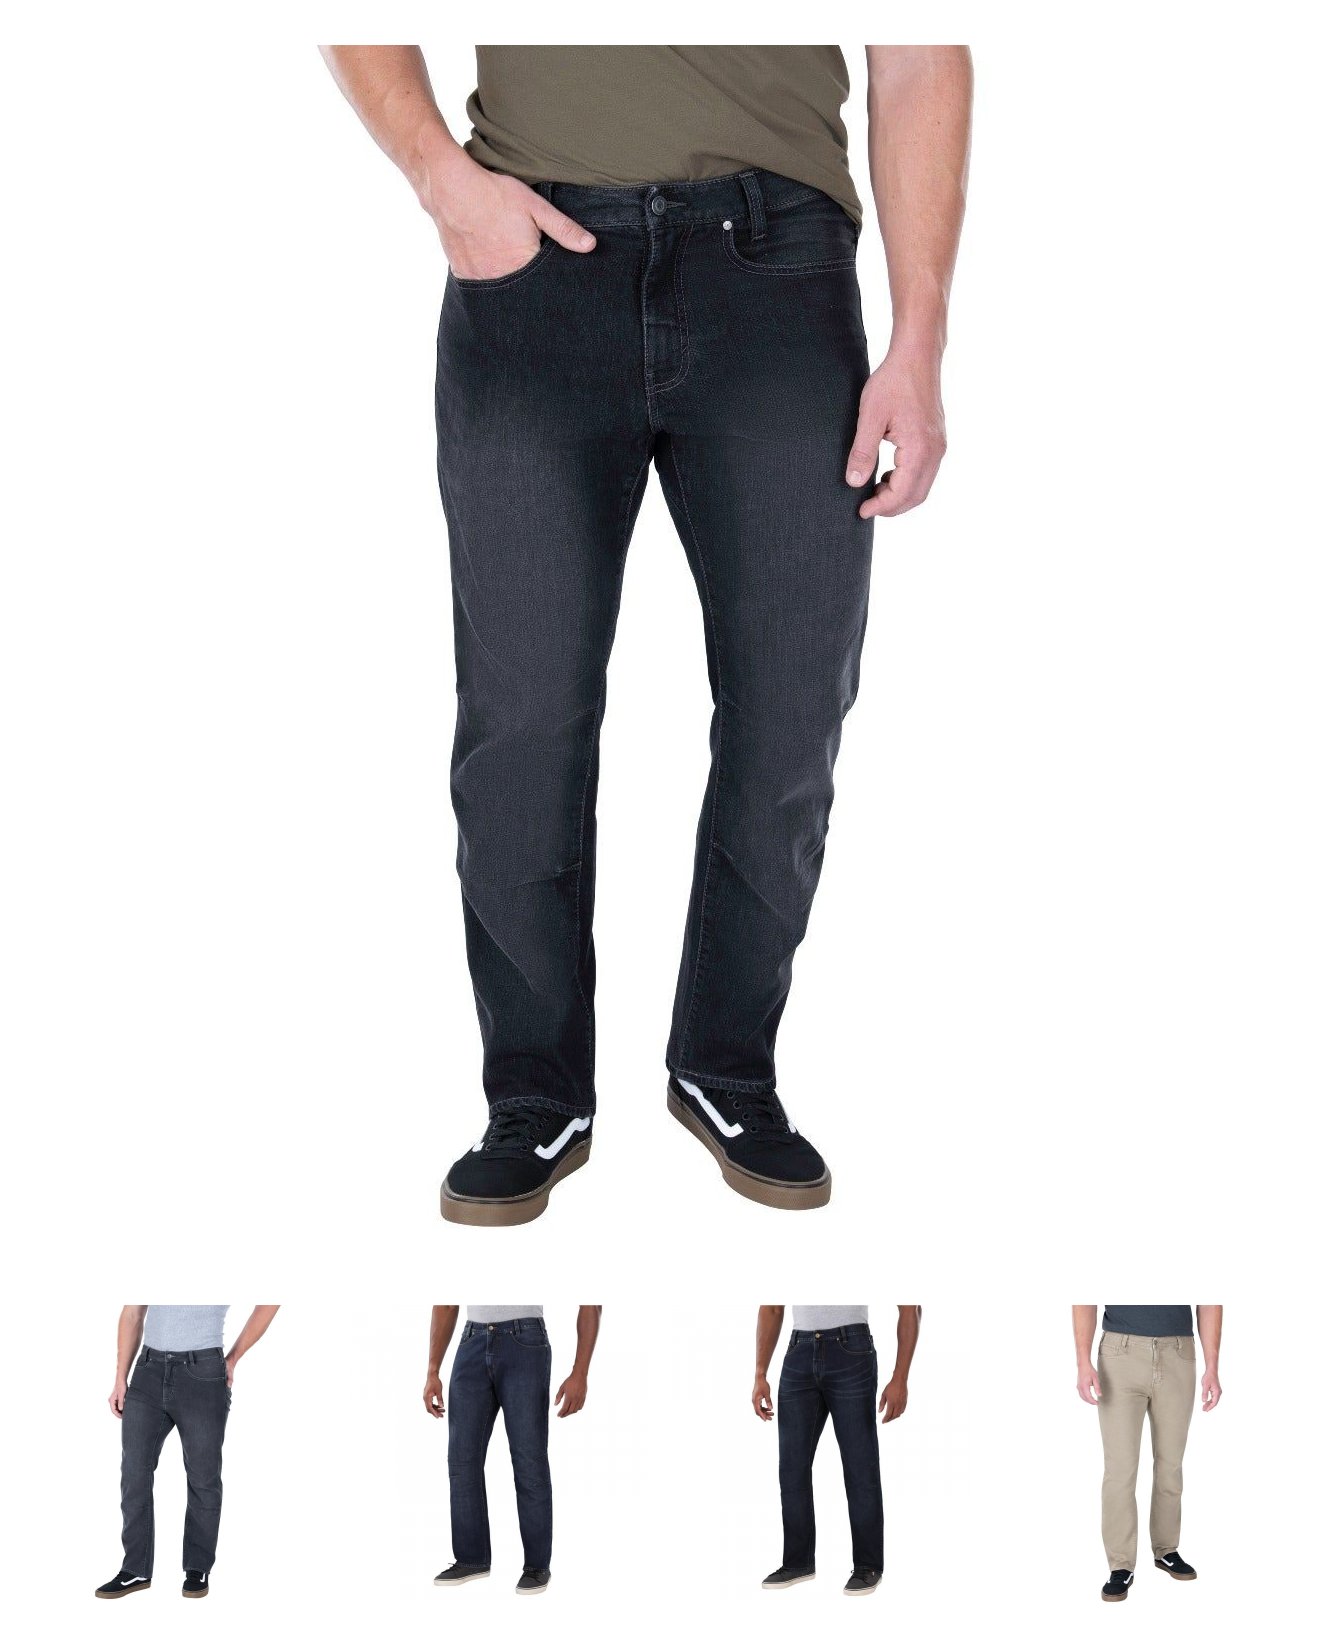 Vertx Defiance Jeans - Men's